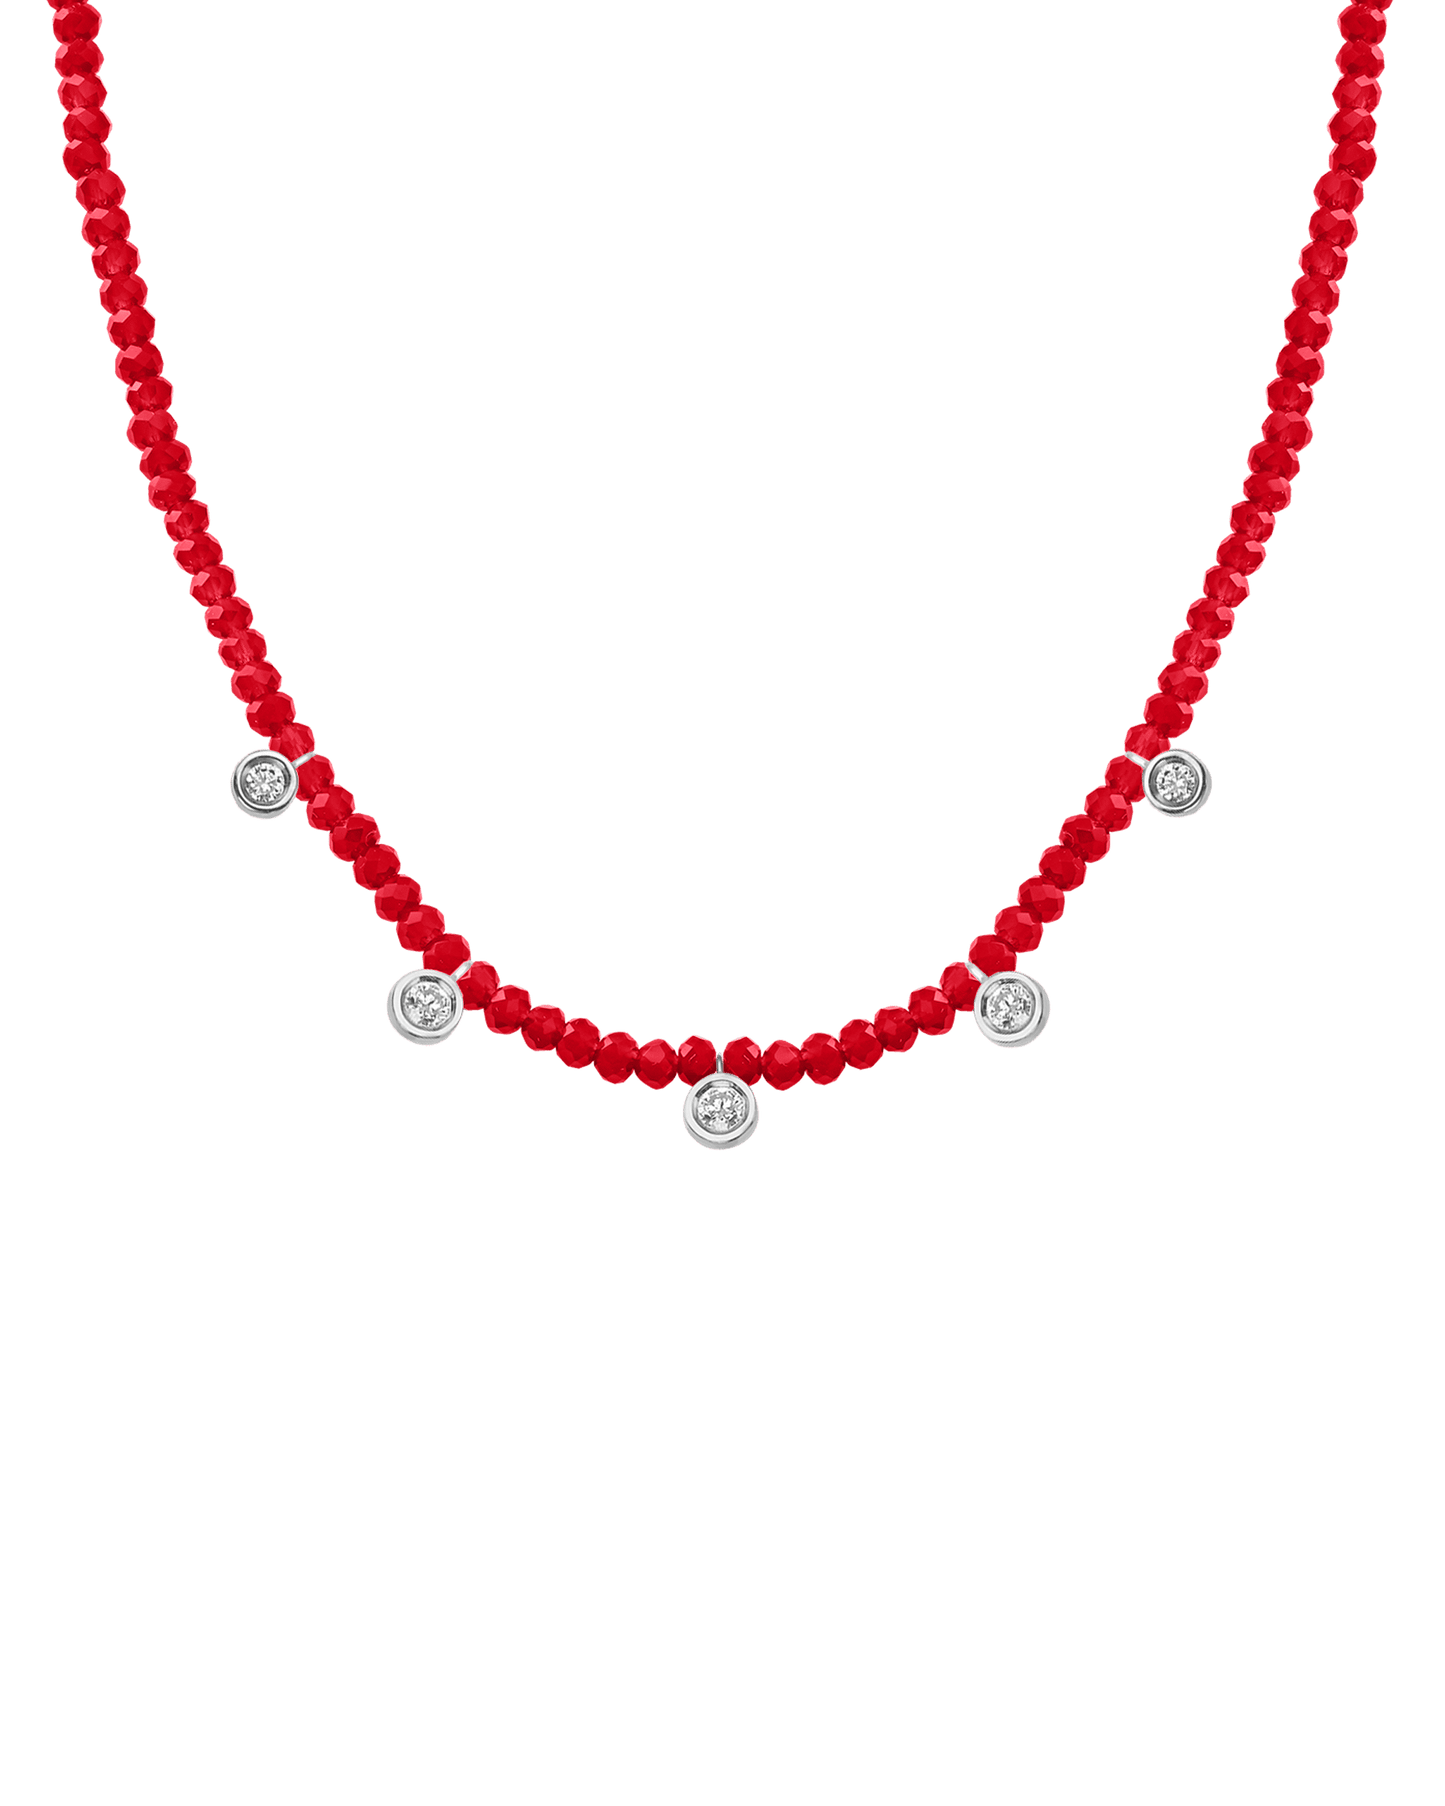 Turquoise Gemstone & Five diamonds Necklace - 14K White Gold